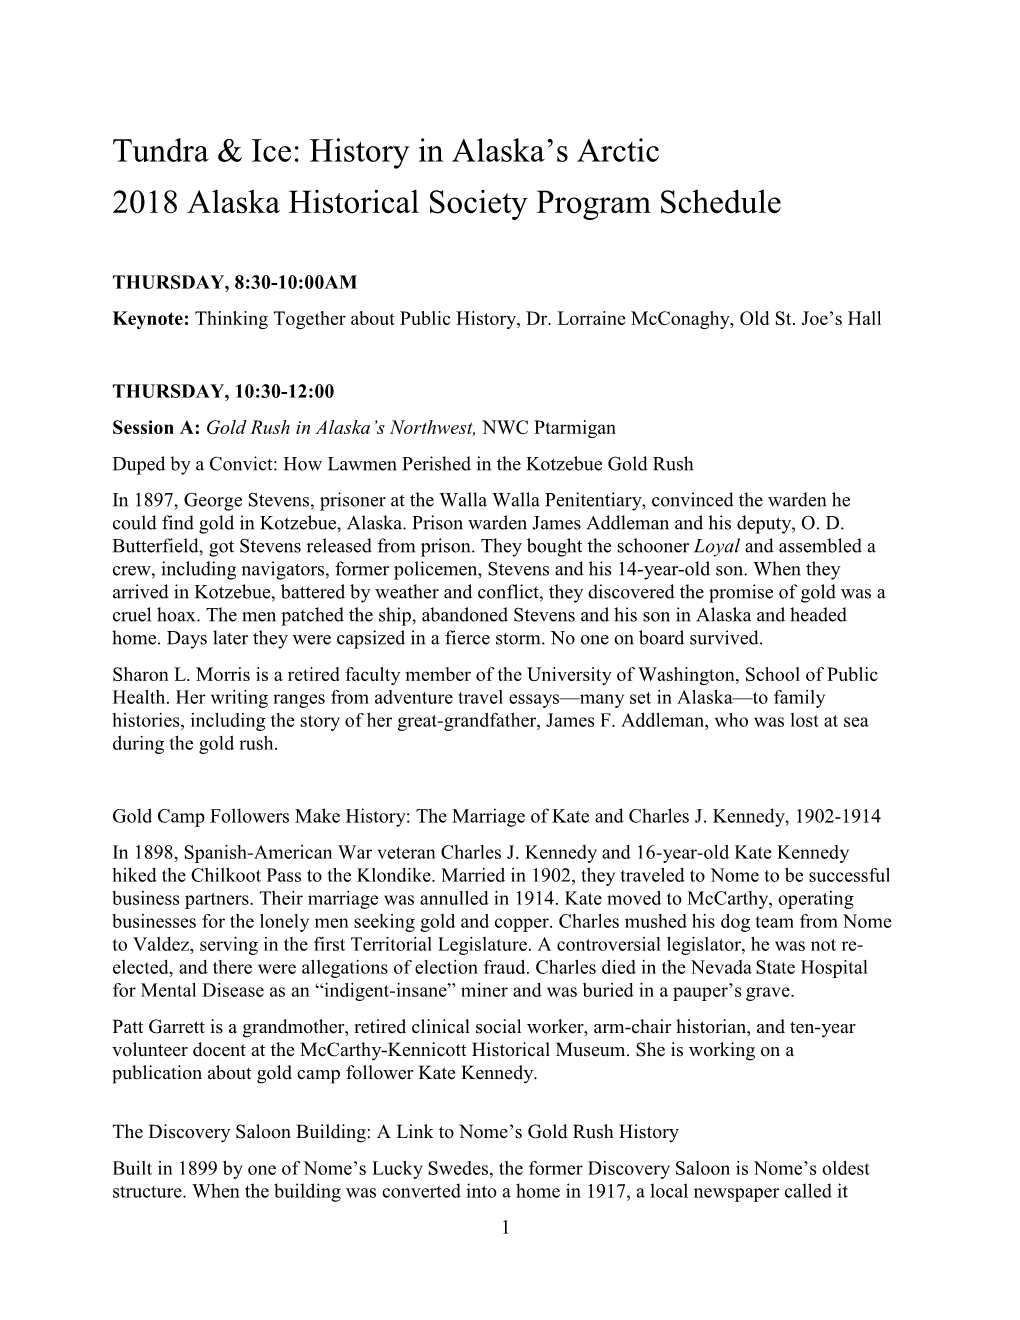 History in Alaska's Arctic 2018 Alaska Historical Society Program Schedule